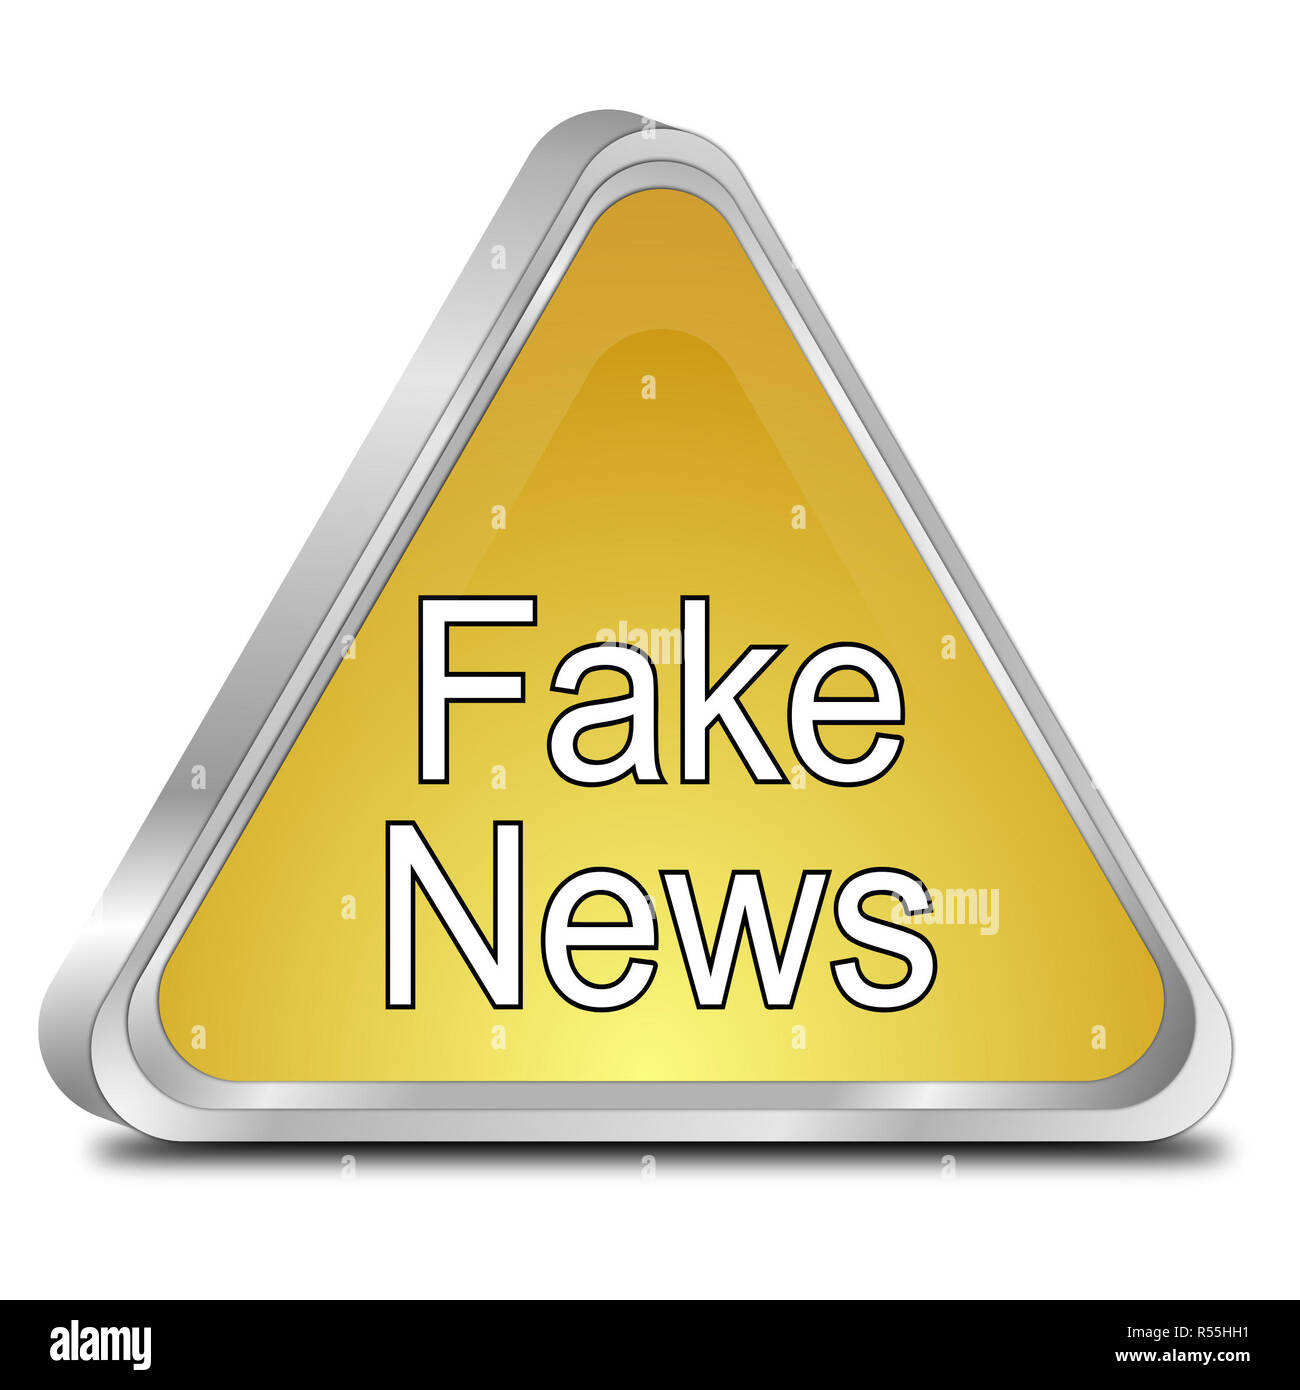 Fake News warning sign - 3D illustration Stock Photo